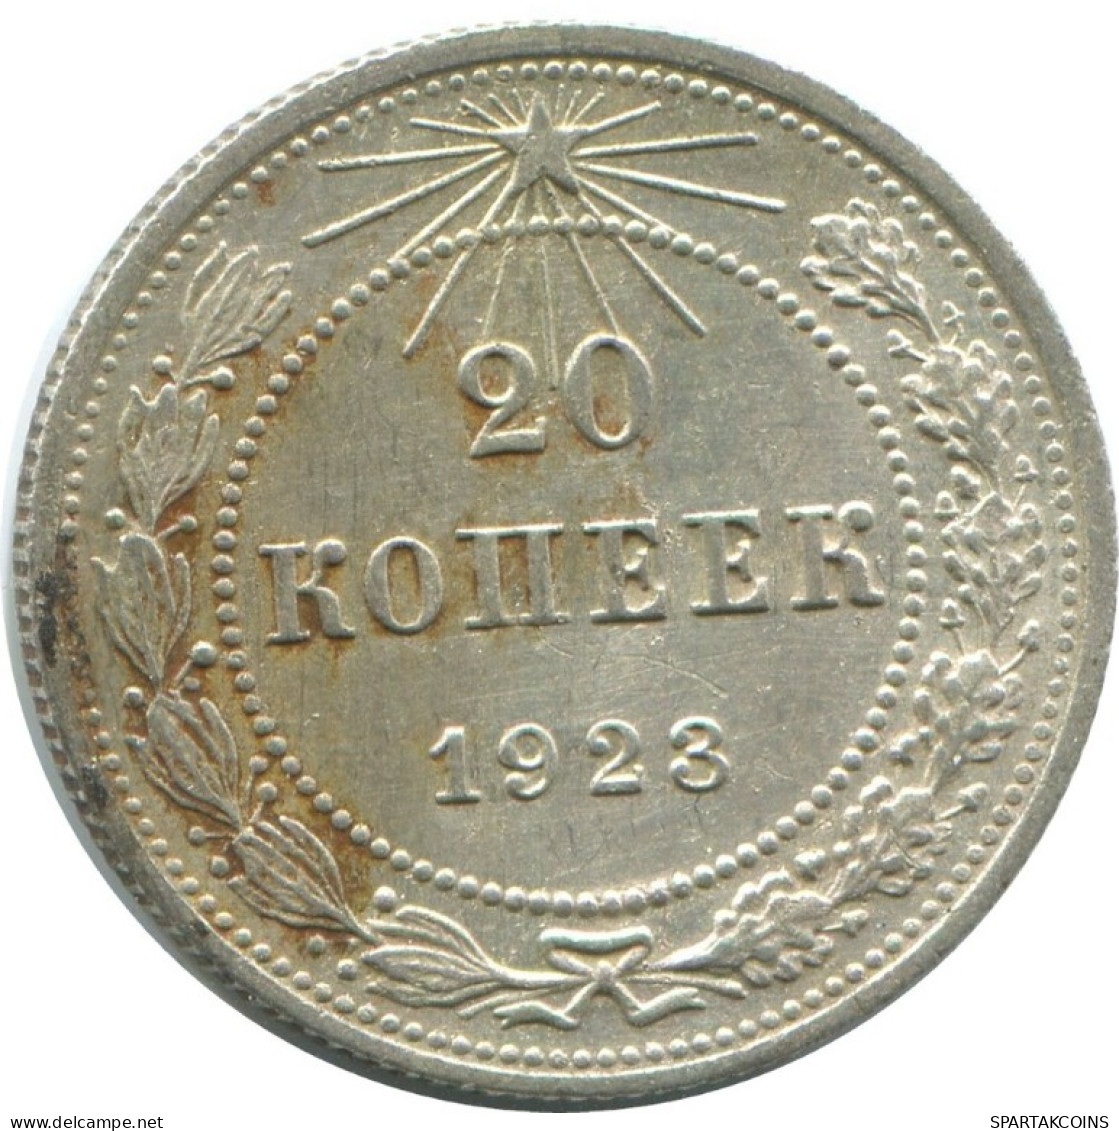 20 KOPEKS 1923 RUSSIA RSFSR SILVER Coin HIGH GRADE #AF694.U.A - Russie